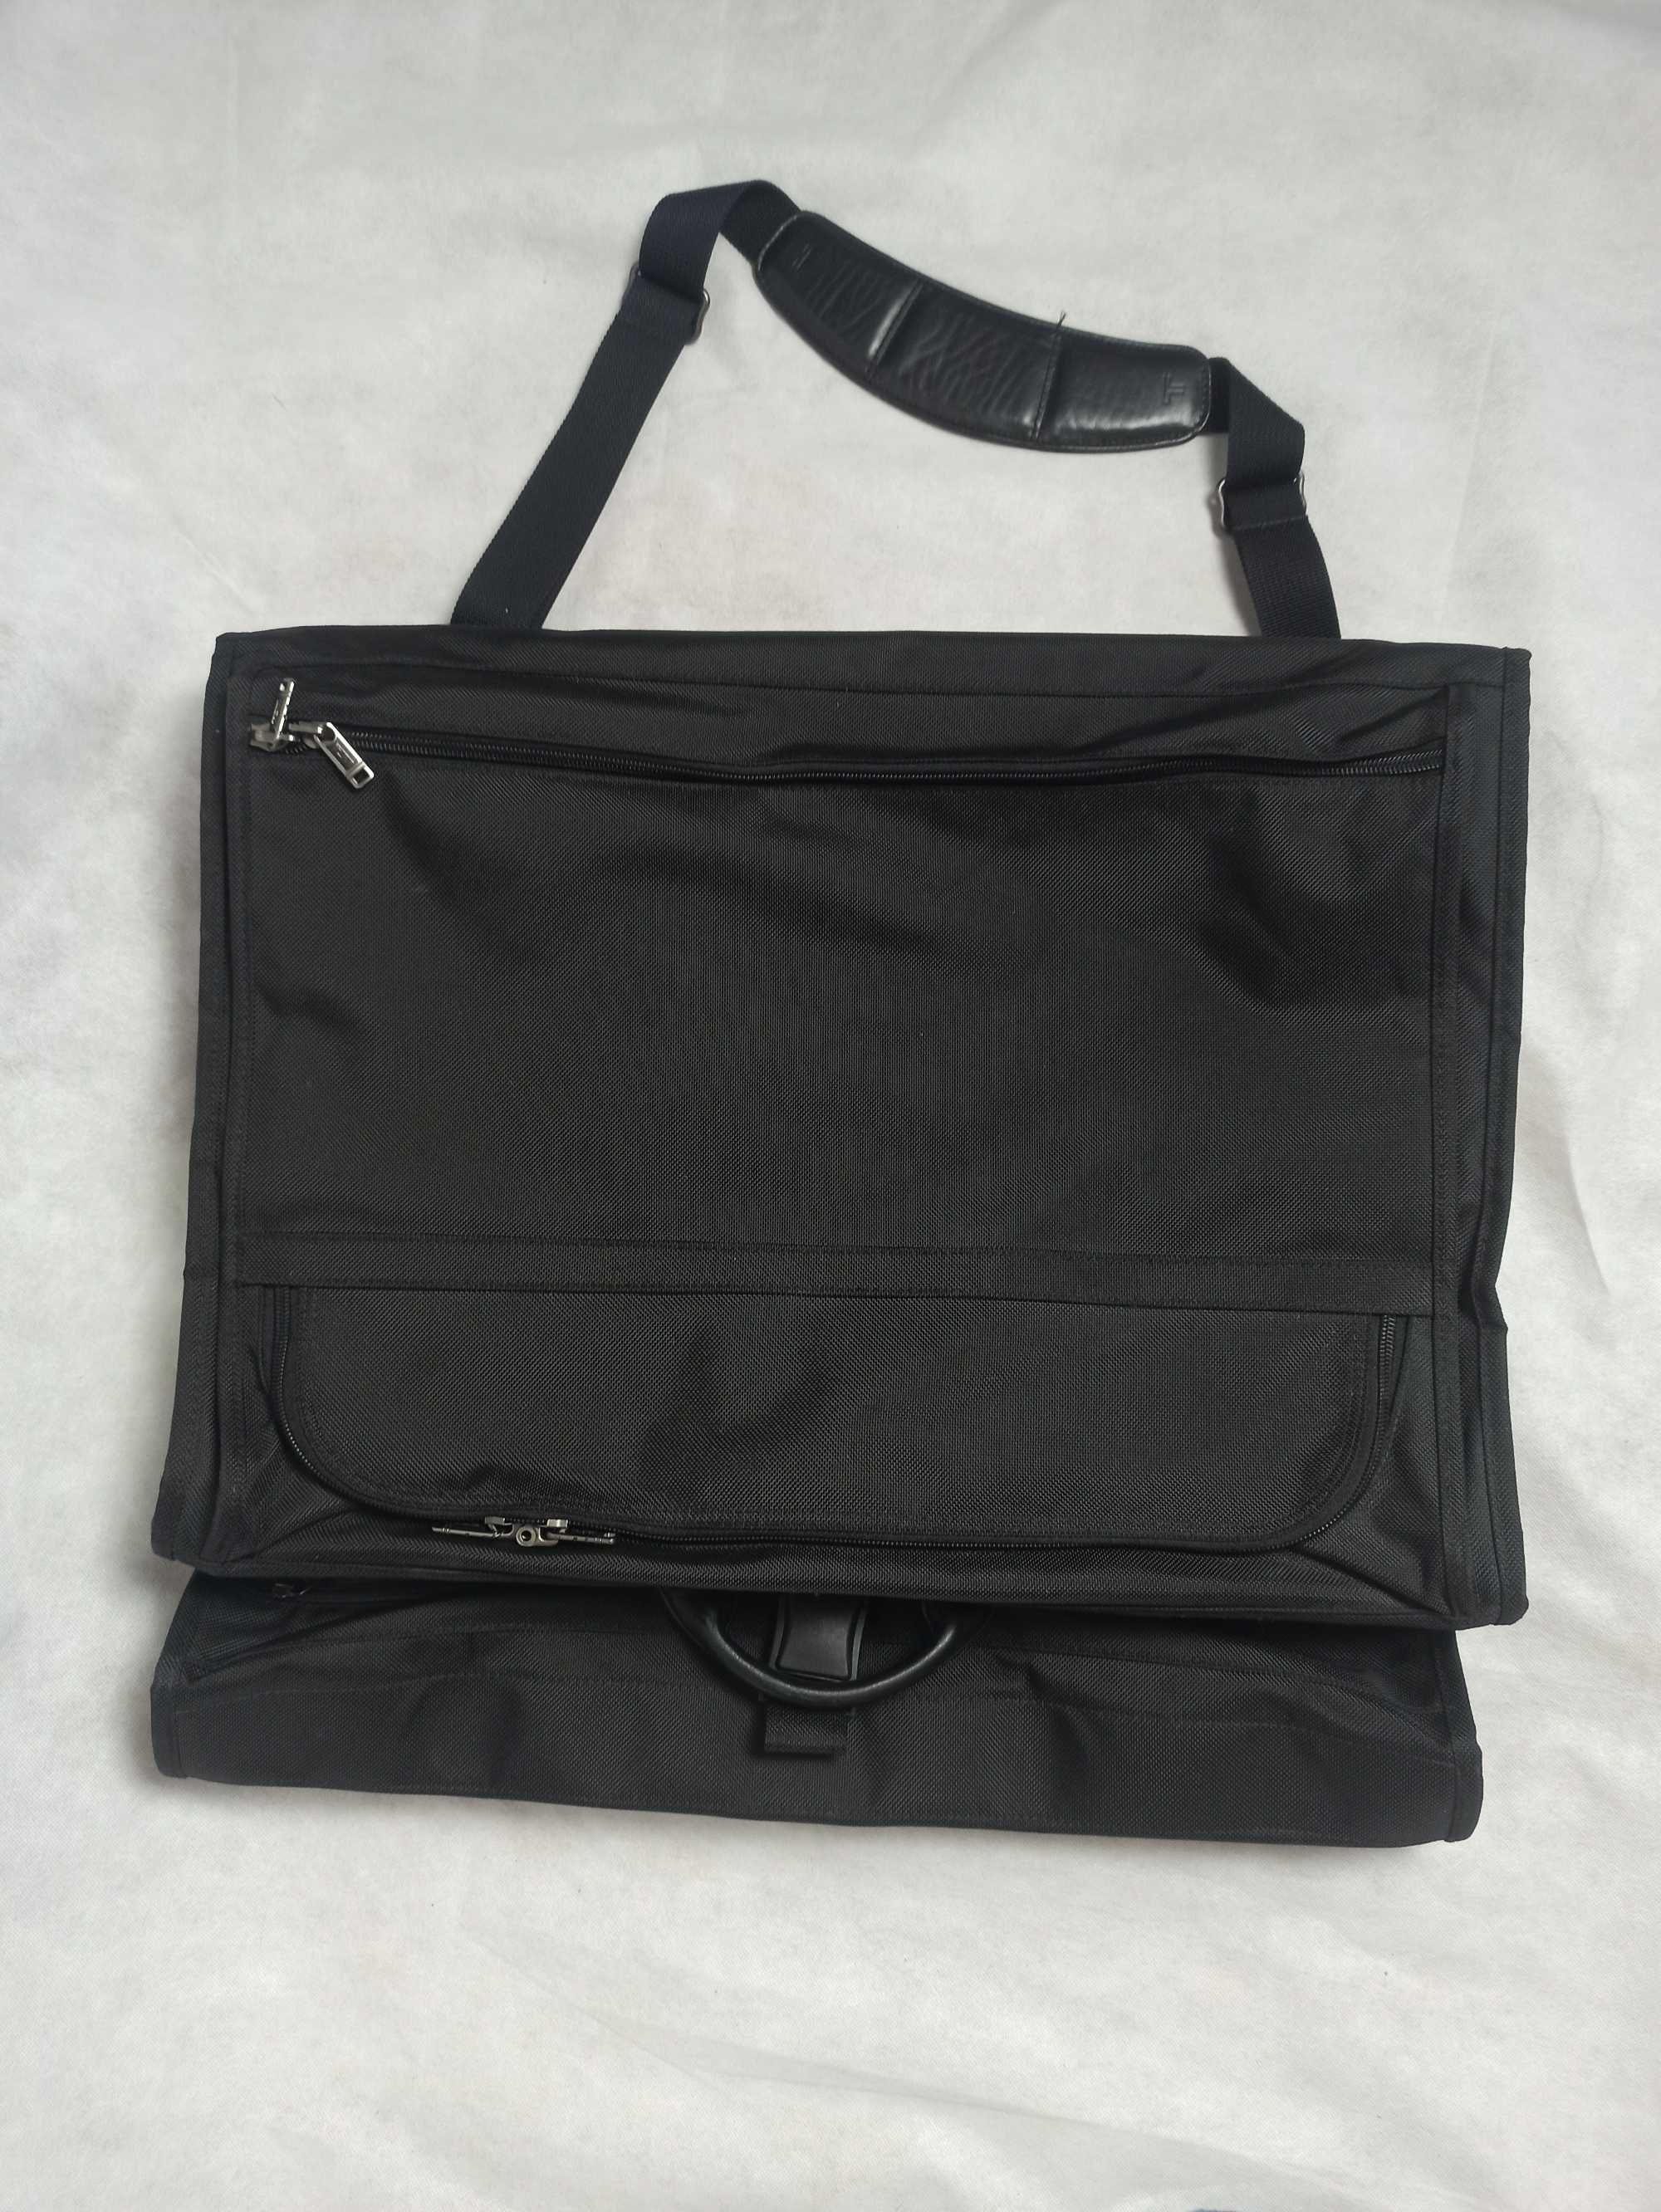 Tumi Alpha Black Garment Bag Tri-Fold Travel Luggage
Torba Torebka